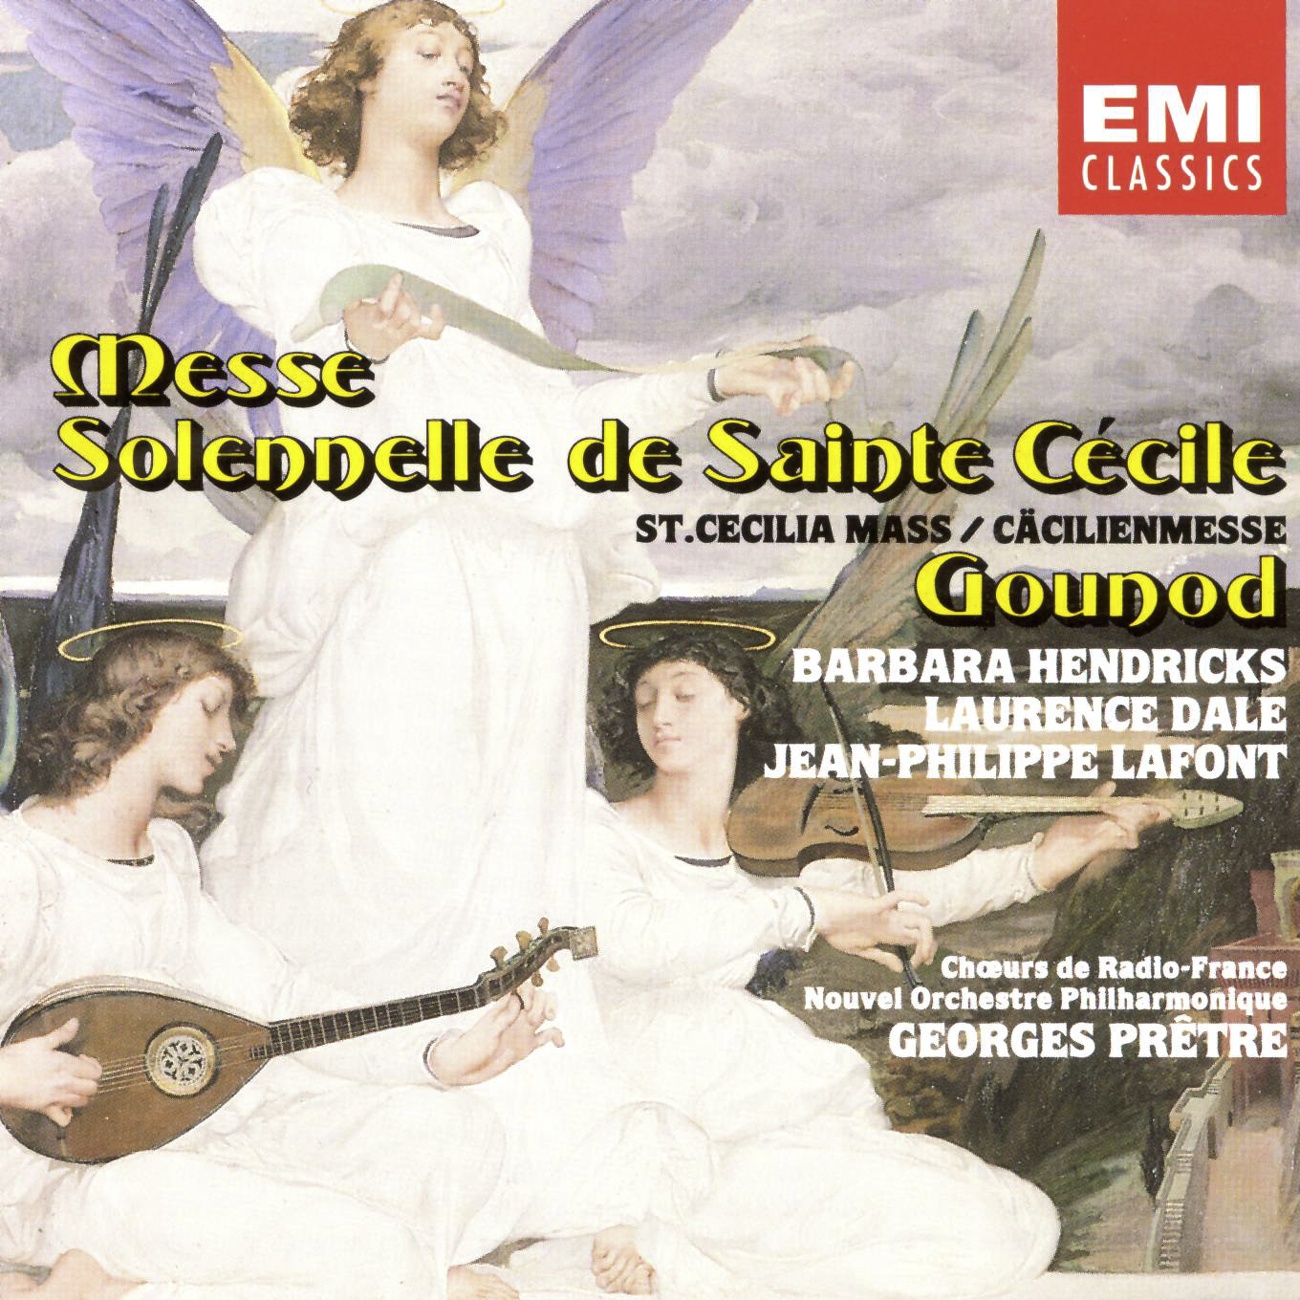 St. Celcilia Mass - Gounod